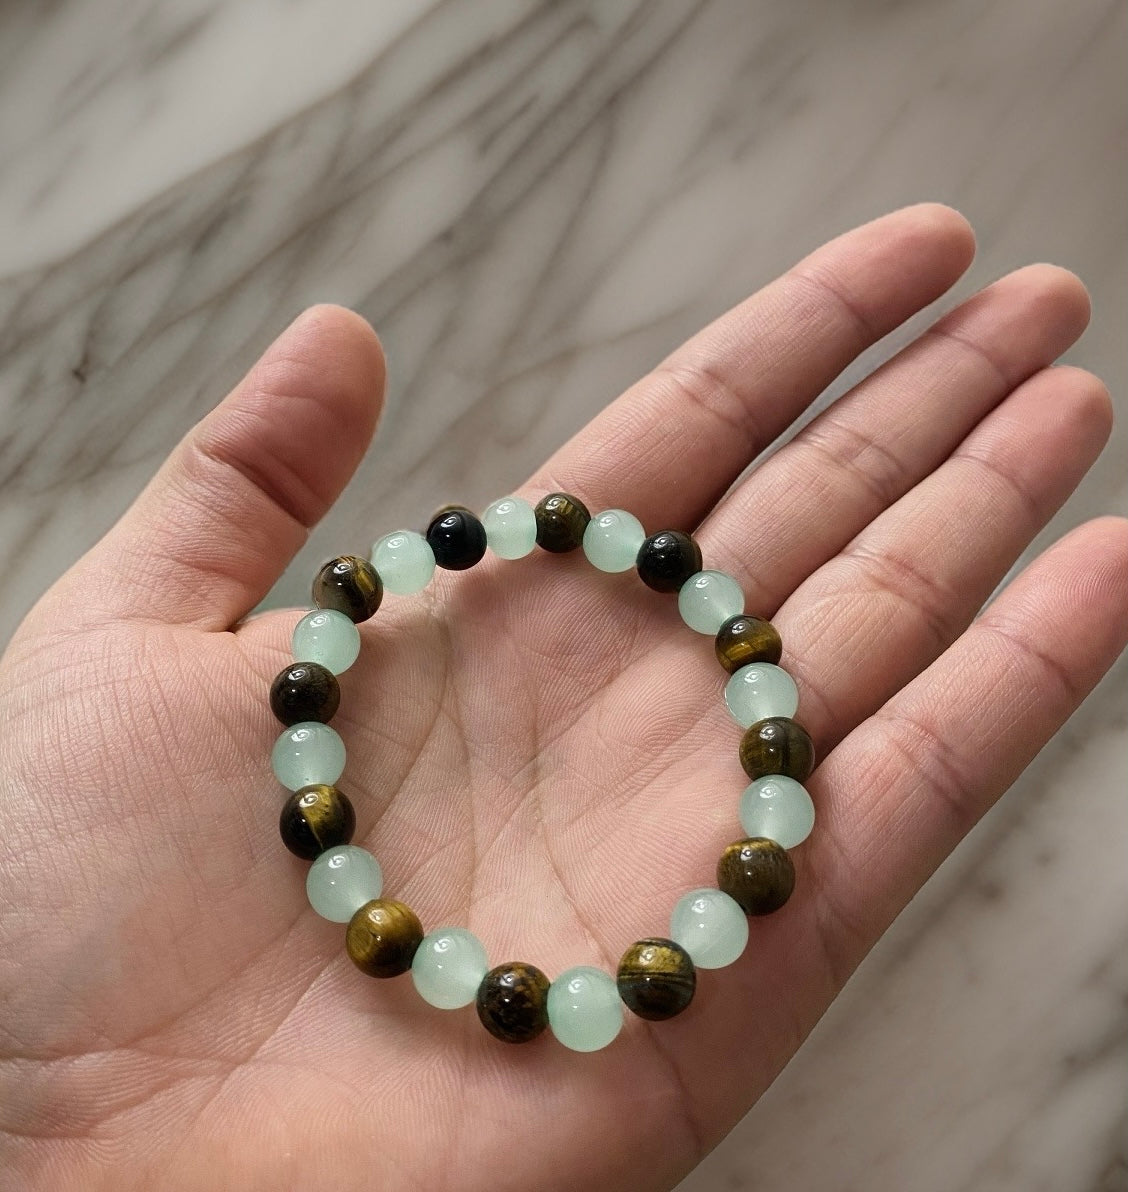 Beads Bracelets (Tiger's Eye - Agate) (8 mm)